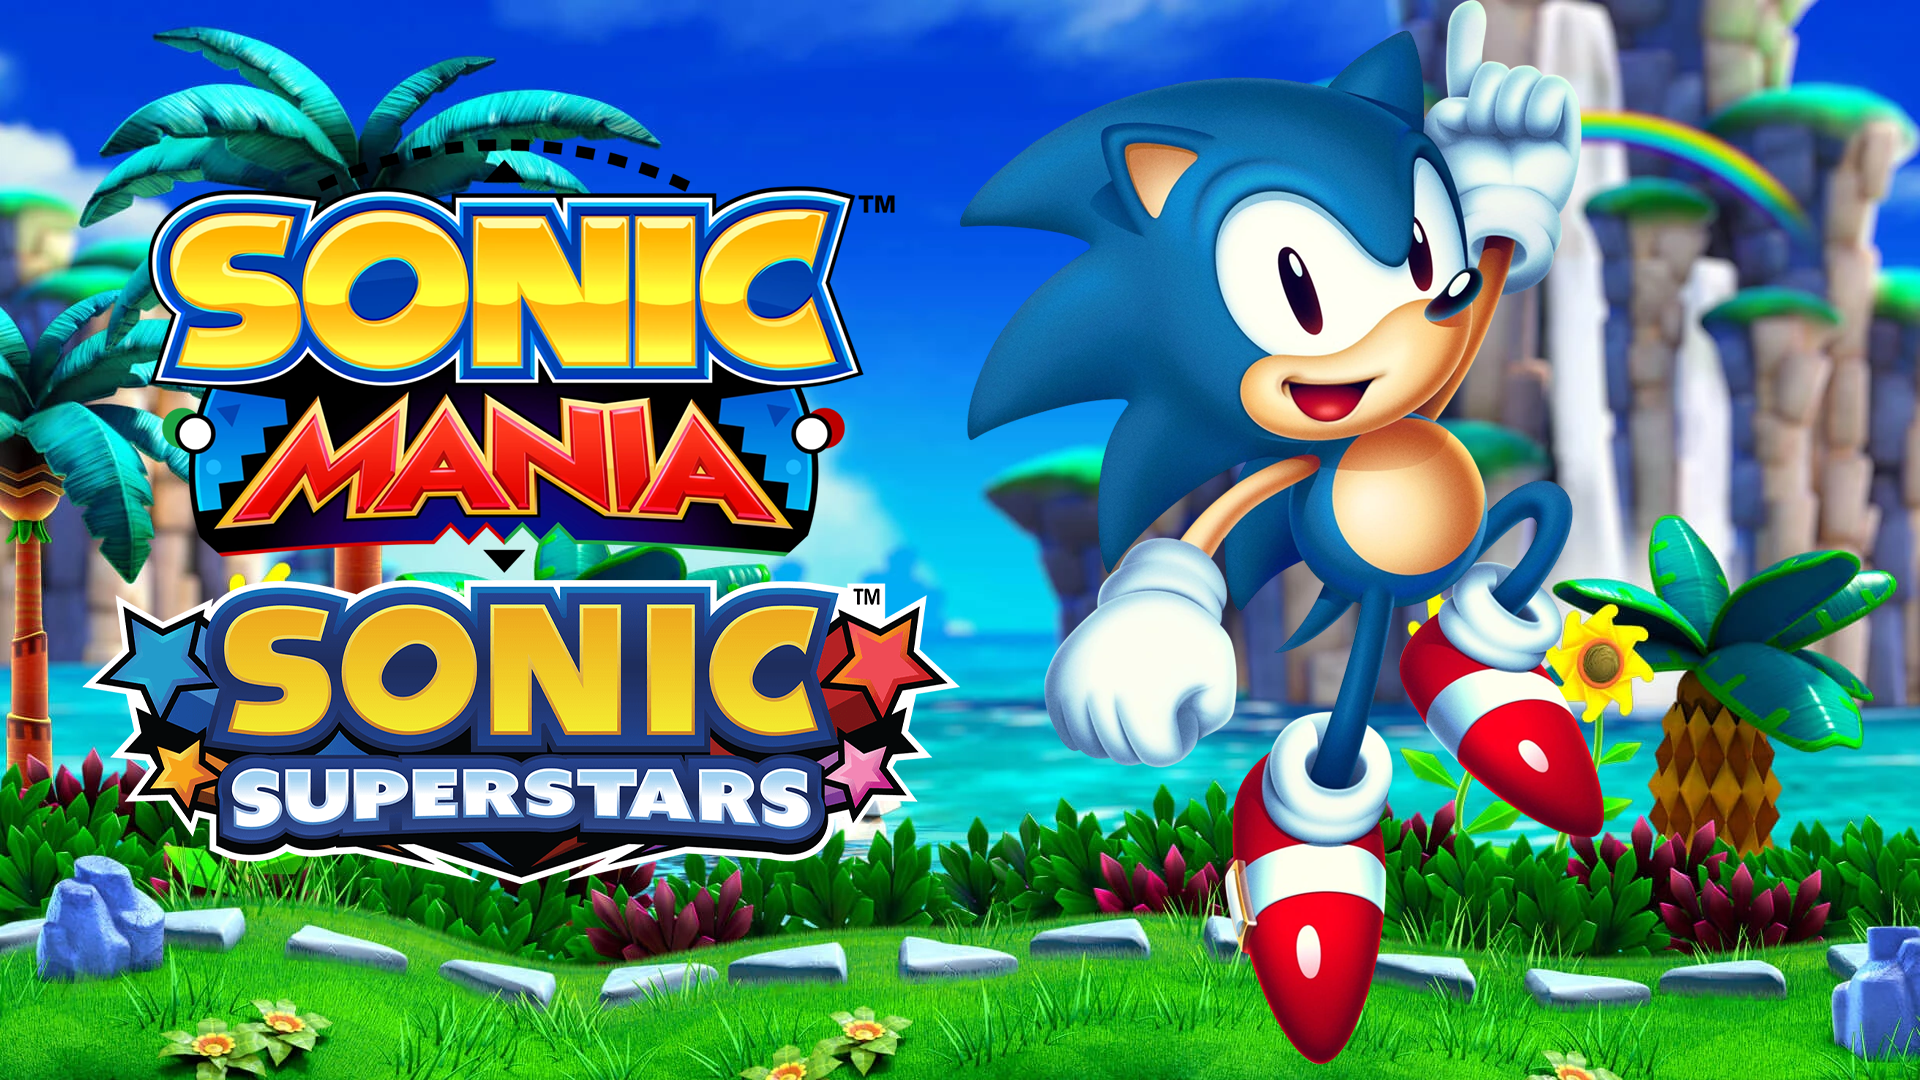 Sonic Mania Developer Confirms Full Translation of Game's Physics